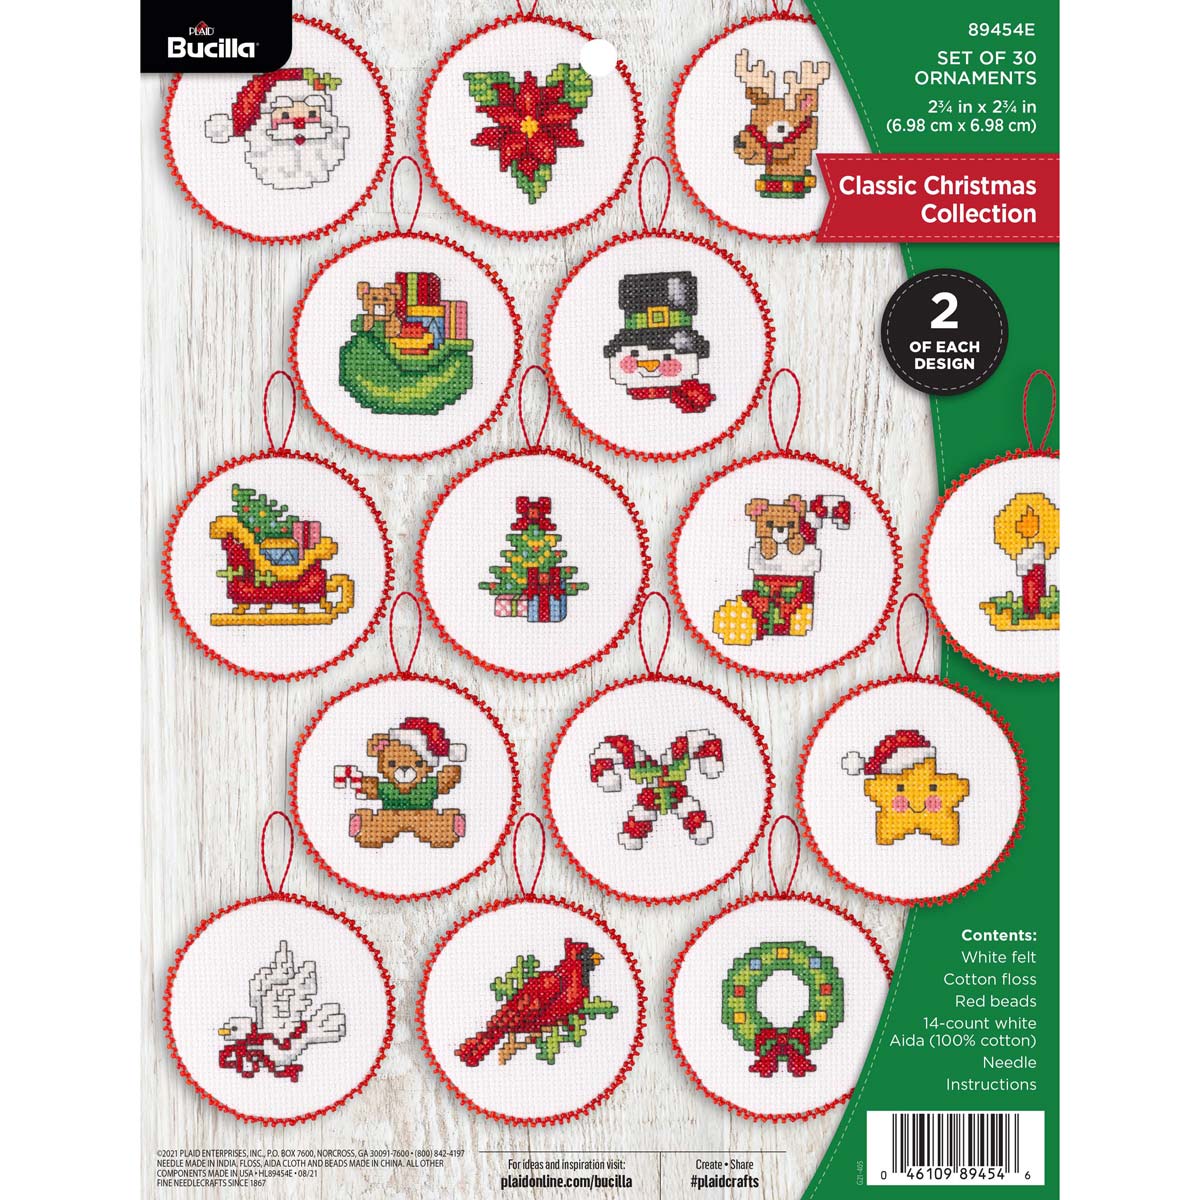 Shop Plaid Bucilla ® Seasonal - Counted Cross Stitch - Ornament Kits -  Classic Christmas Collection - 89454E - 89454E